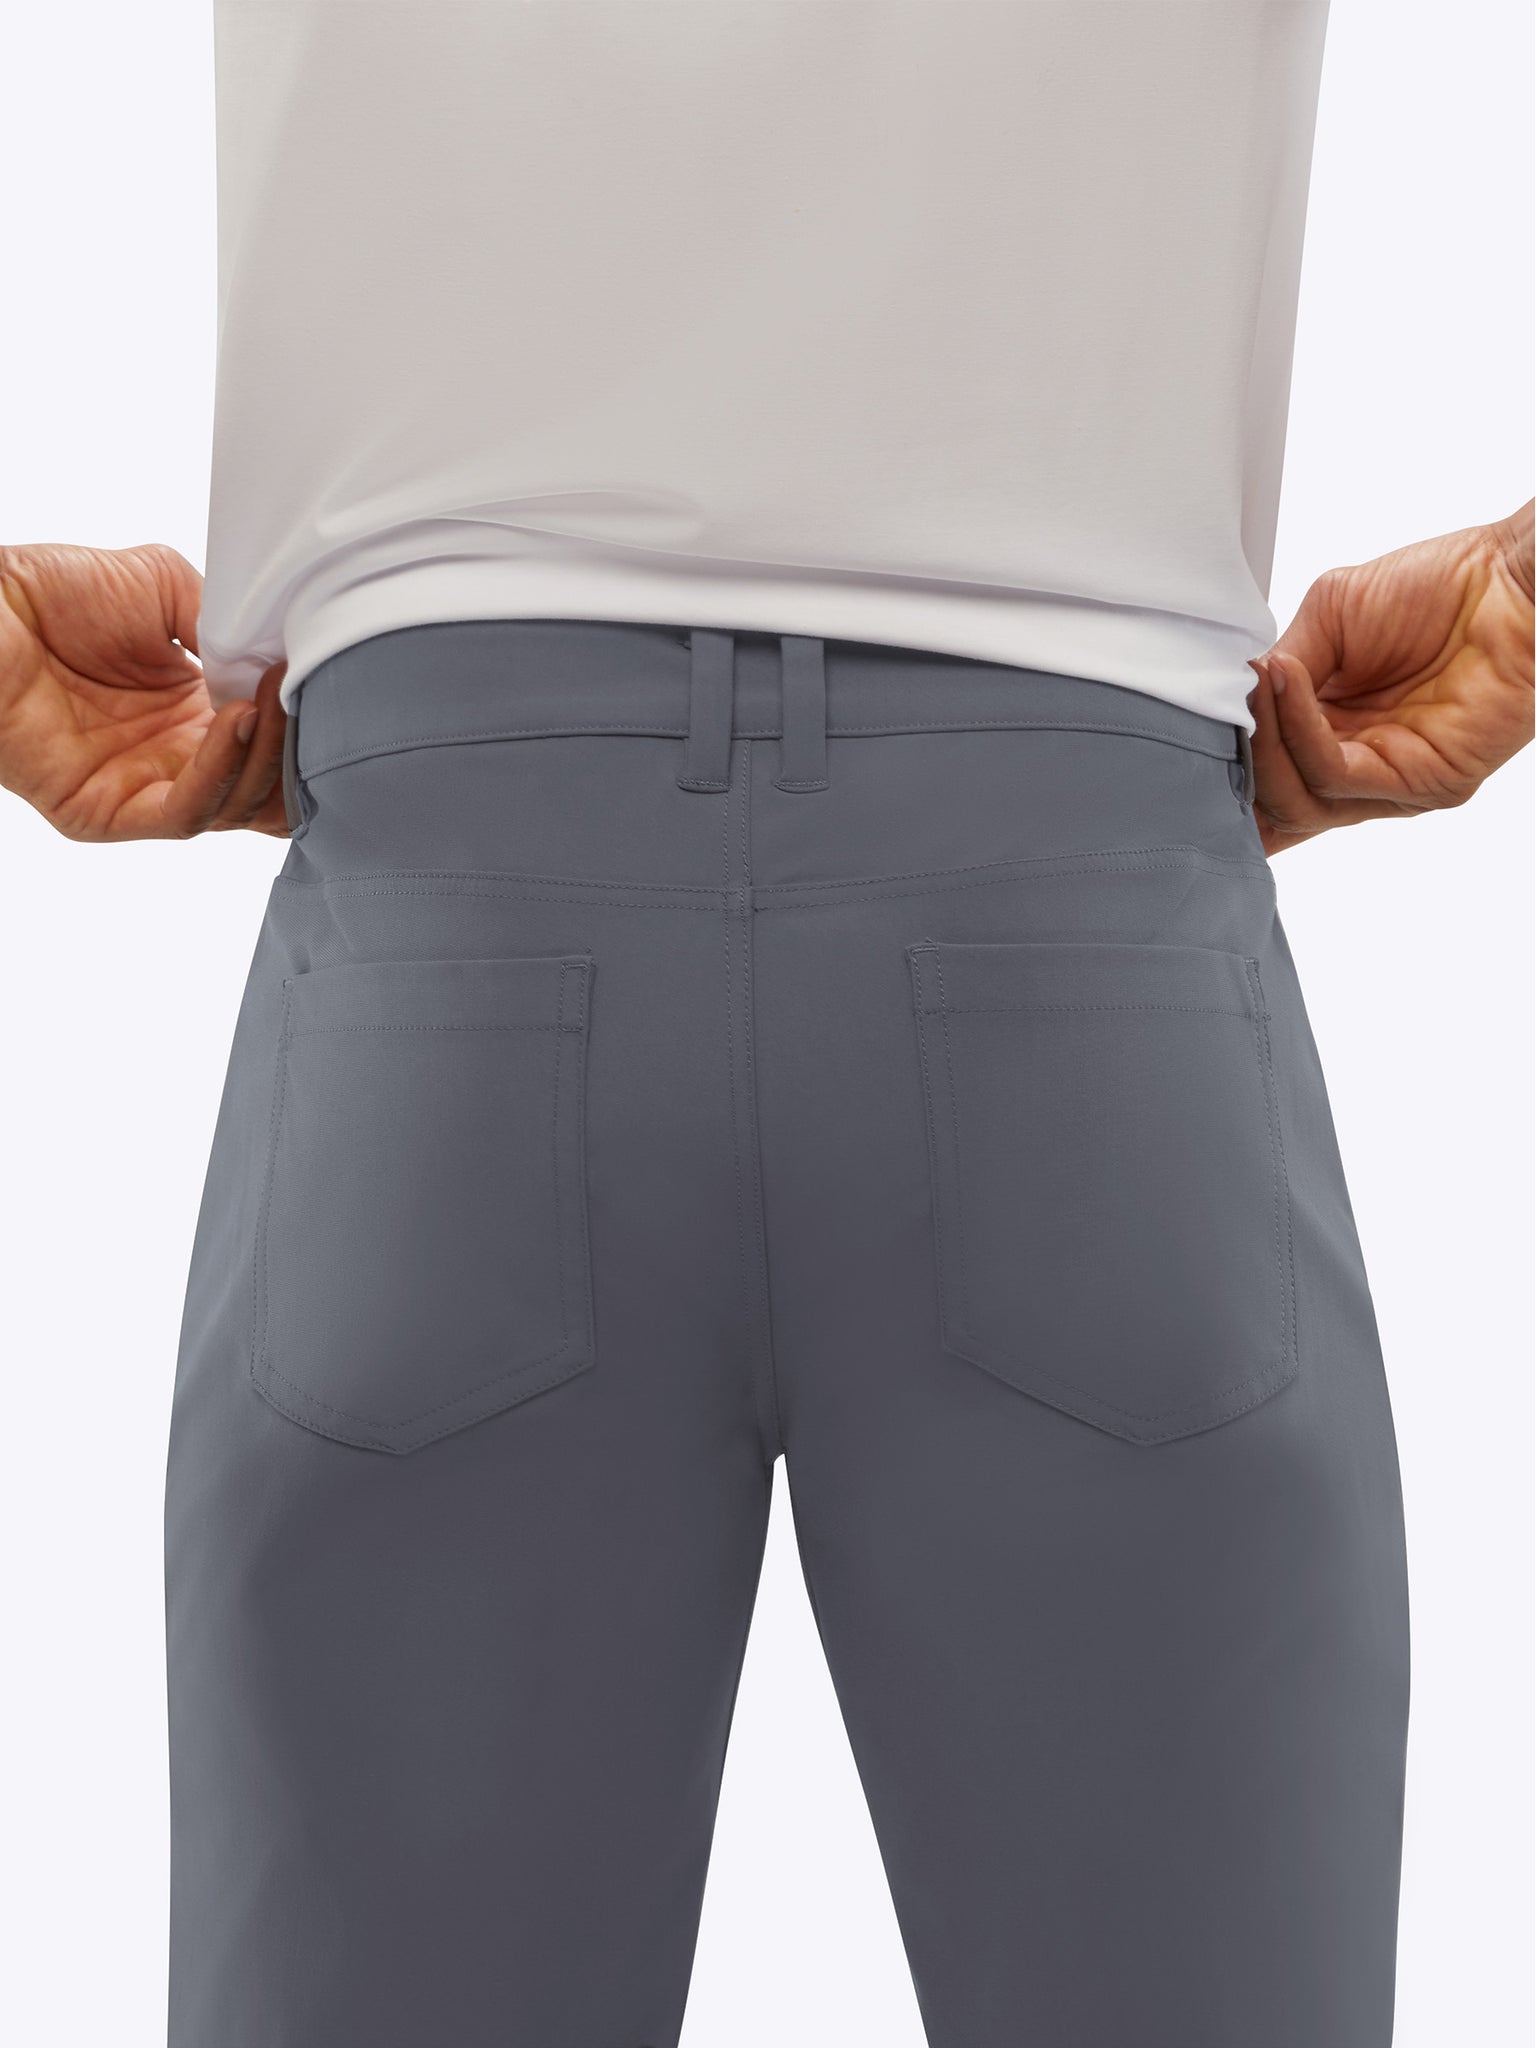 AO 5-Pocket Pant  Graphite Slim-Fit Versaknit™